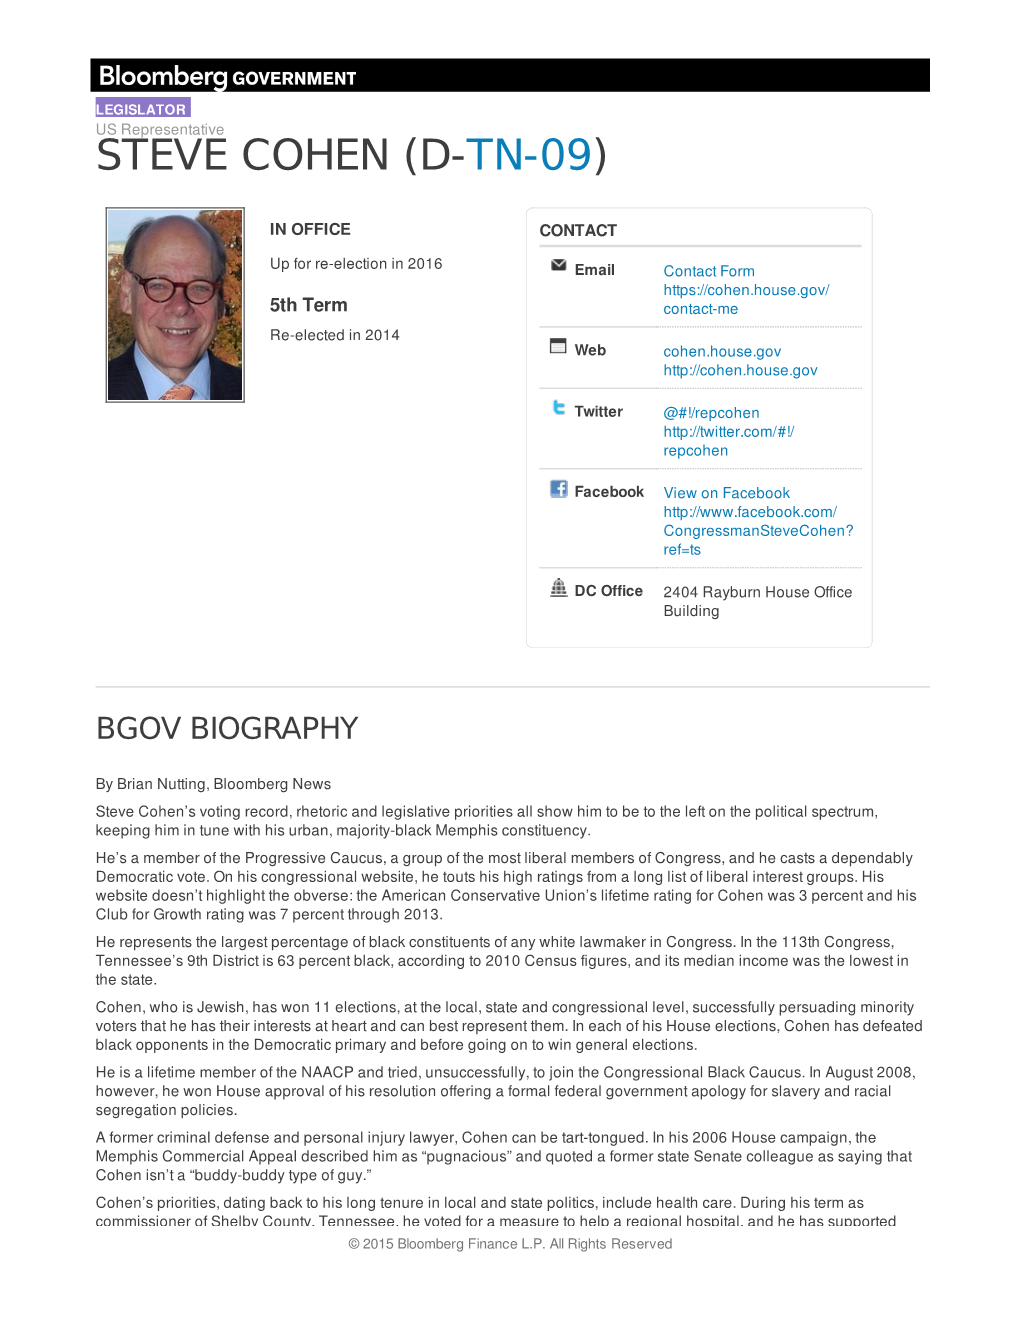 Steve Cohen (D-Tn-09)